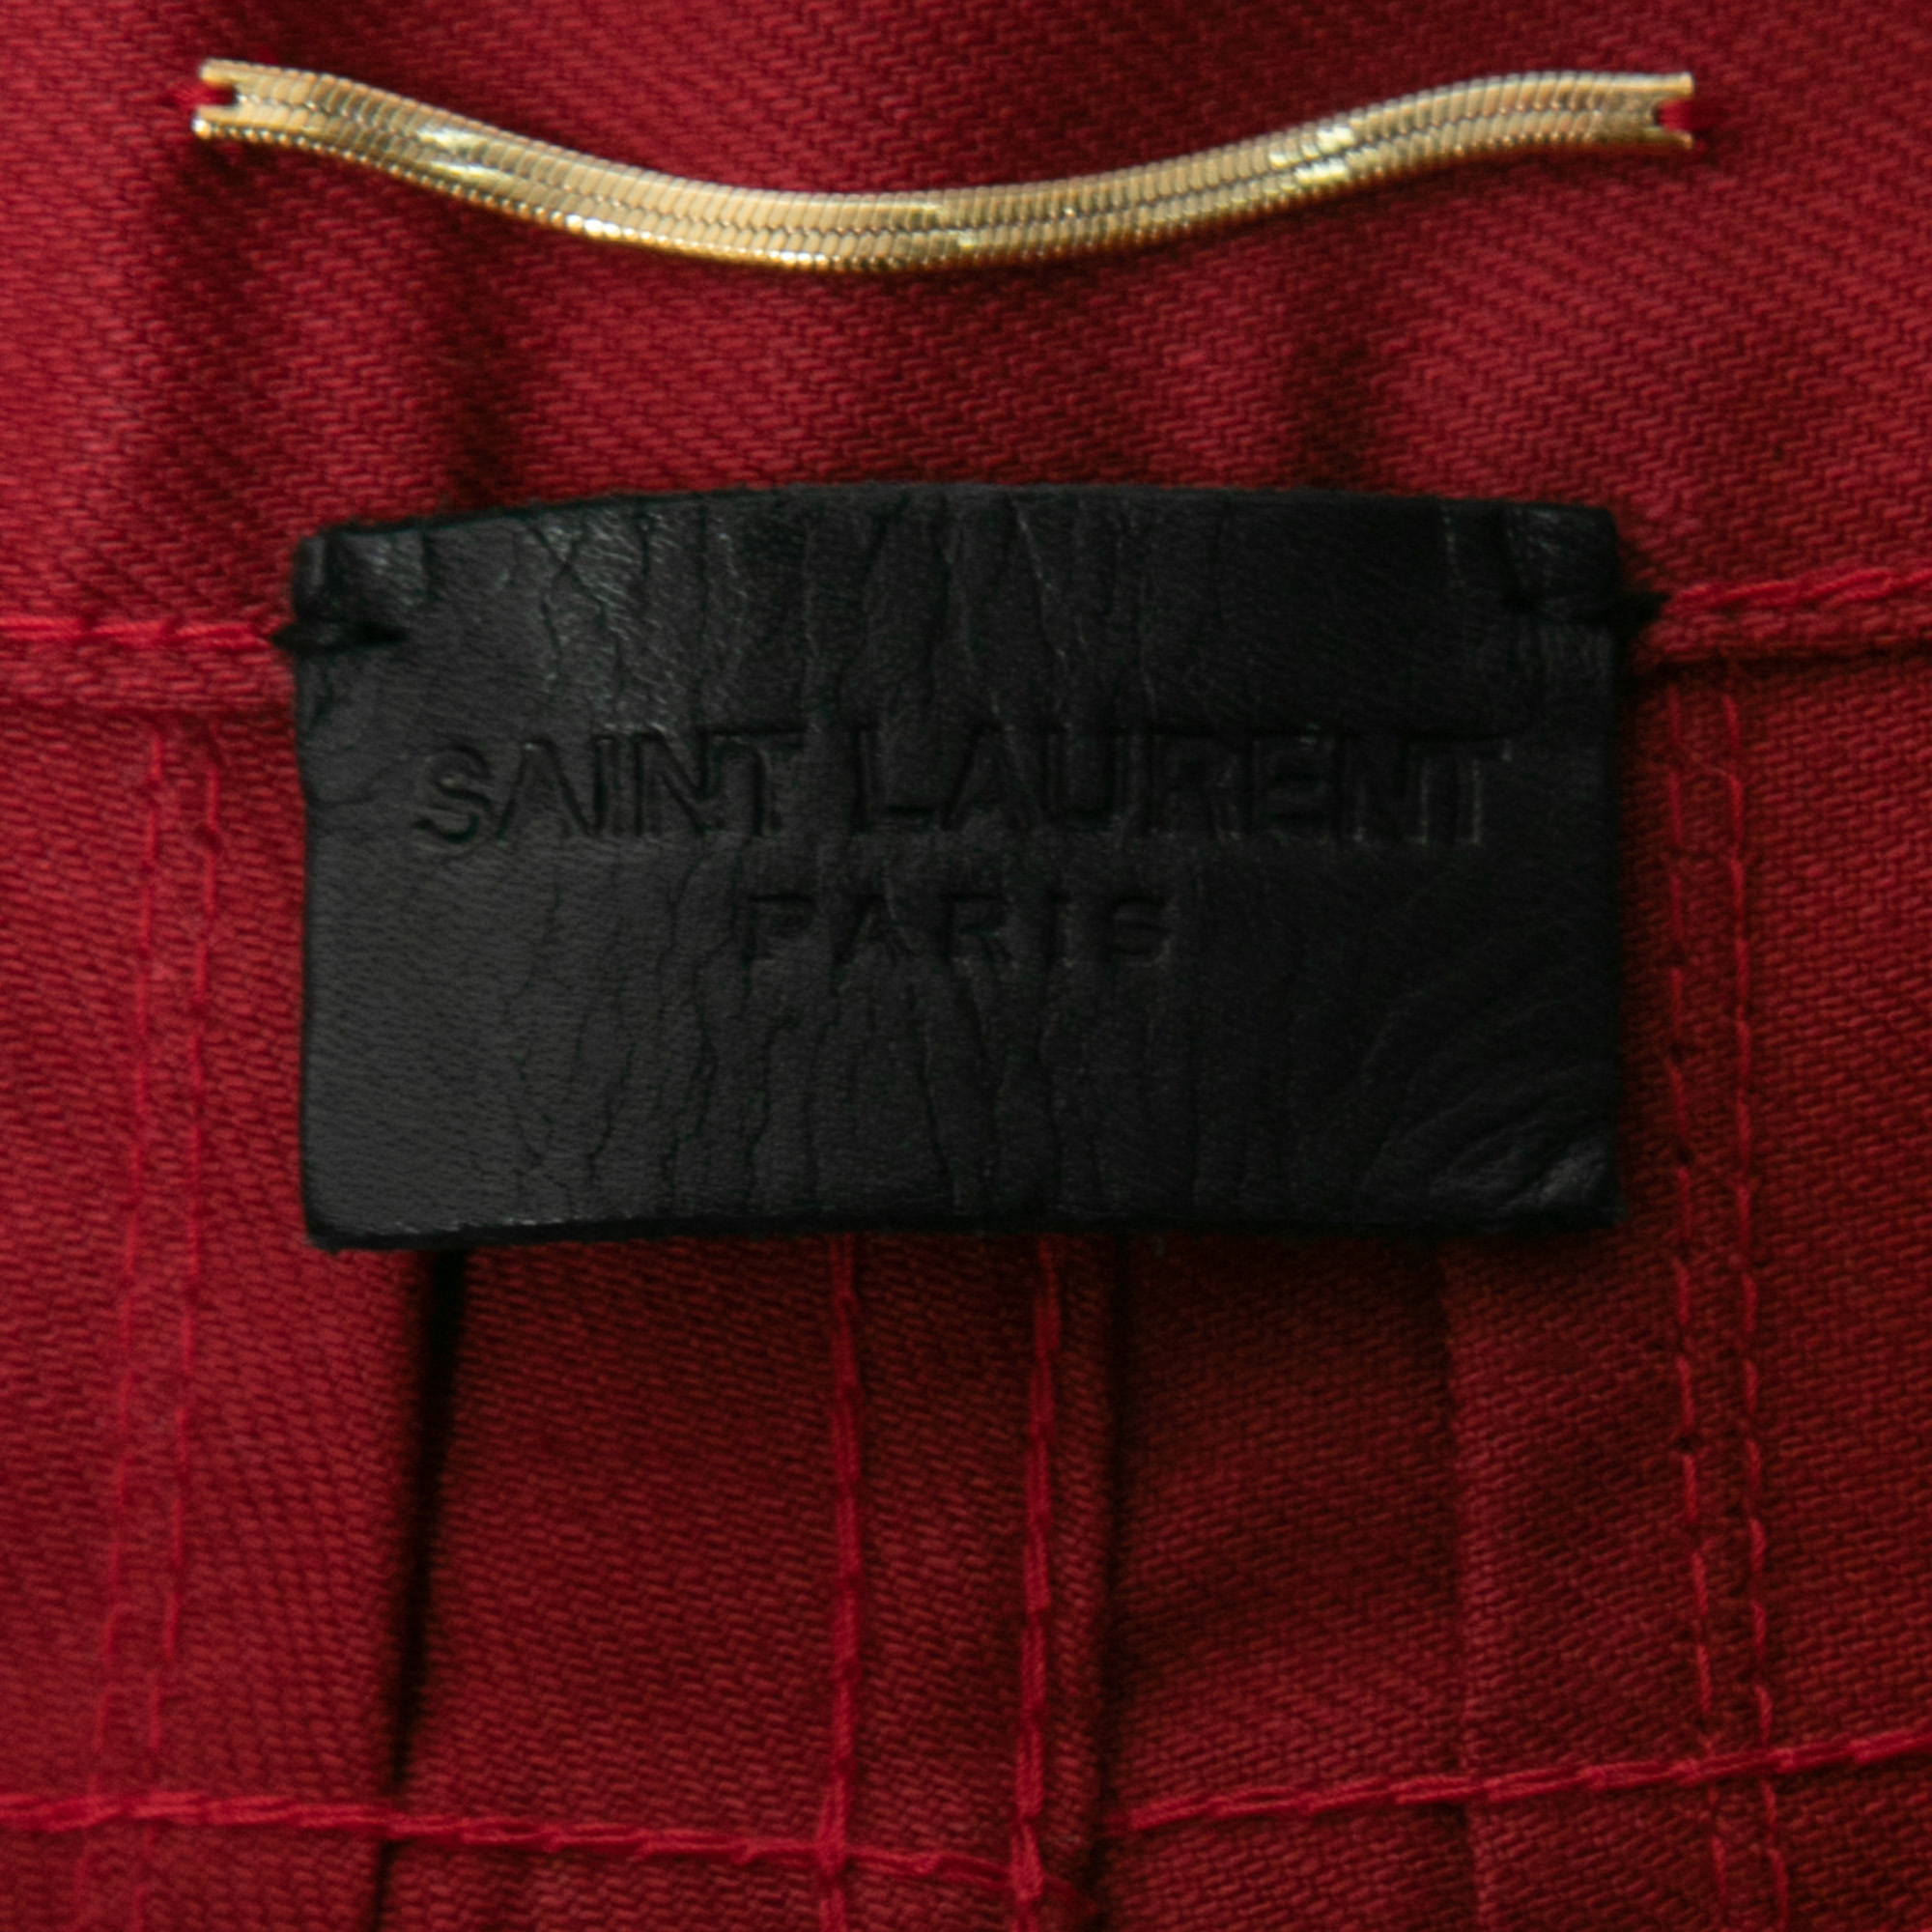 Saint Laurent Paris Brick Red Stretch Denim Skinny Jeans M